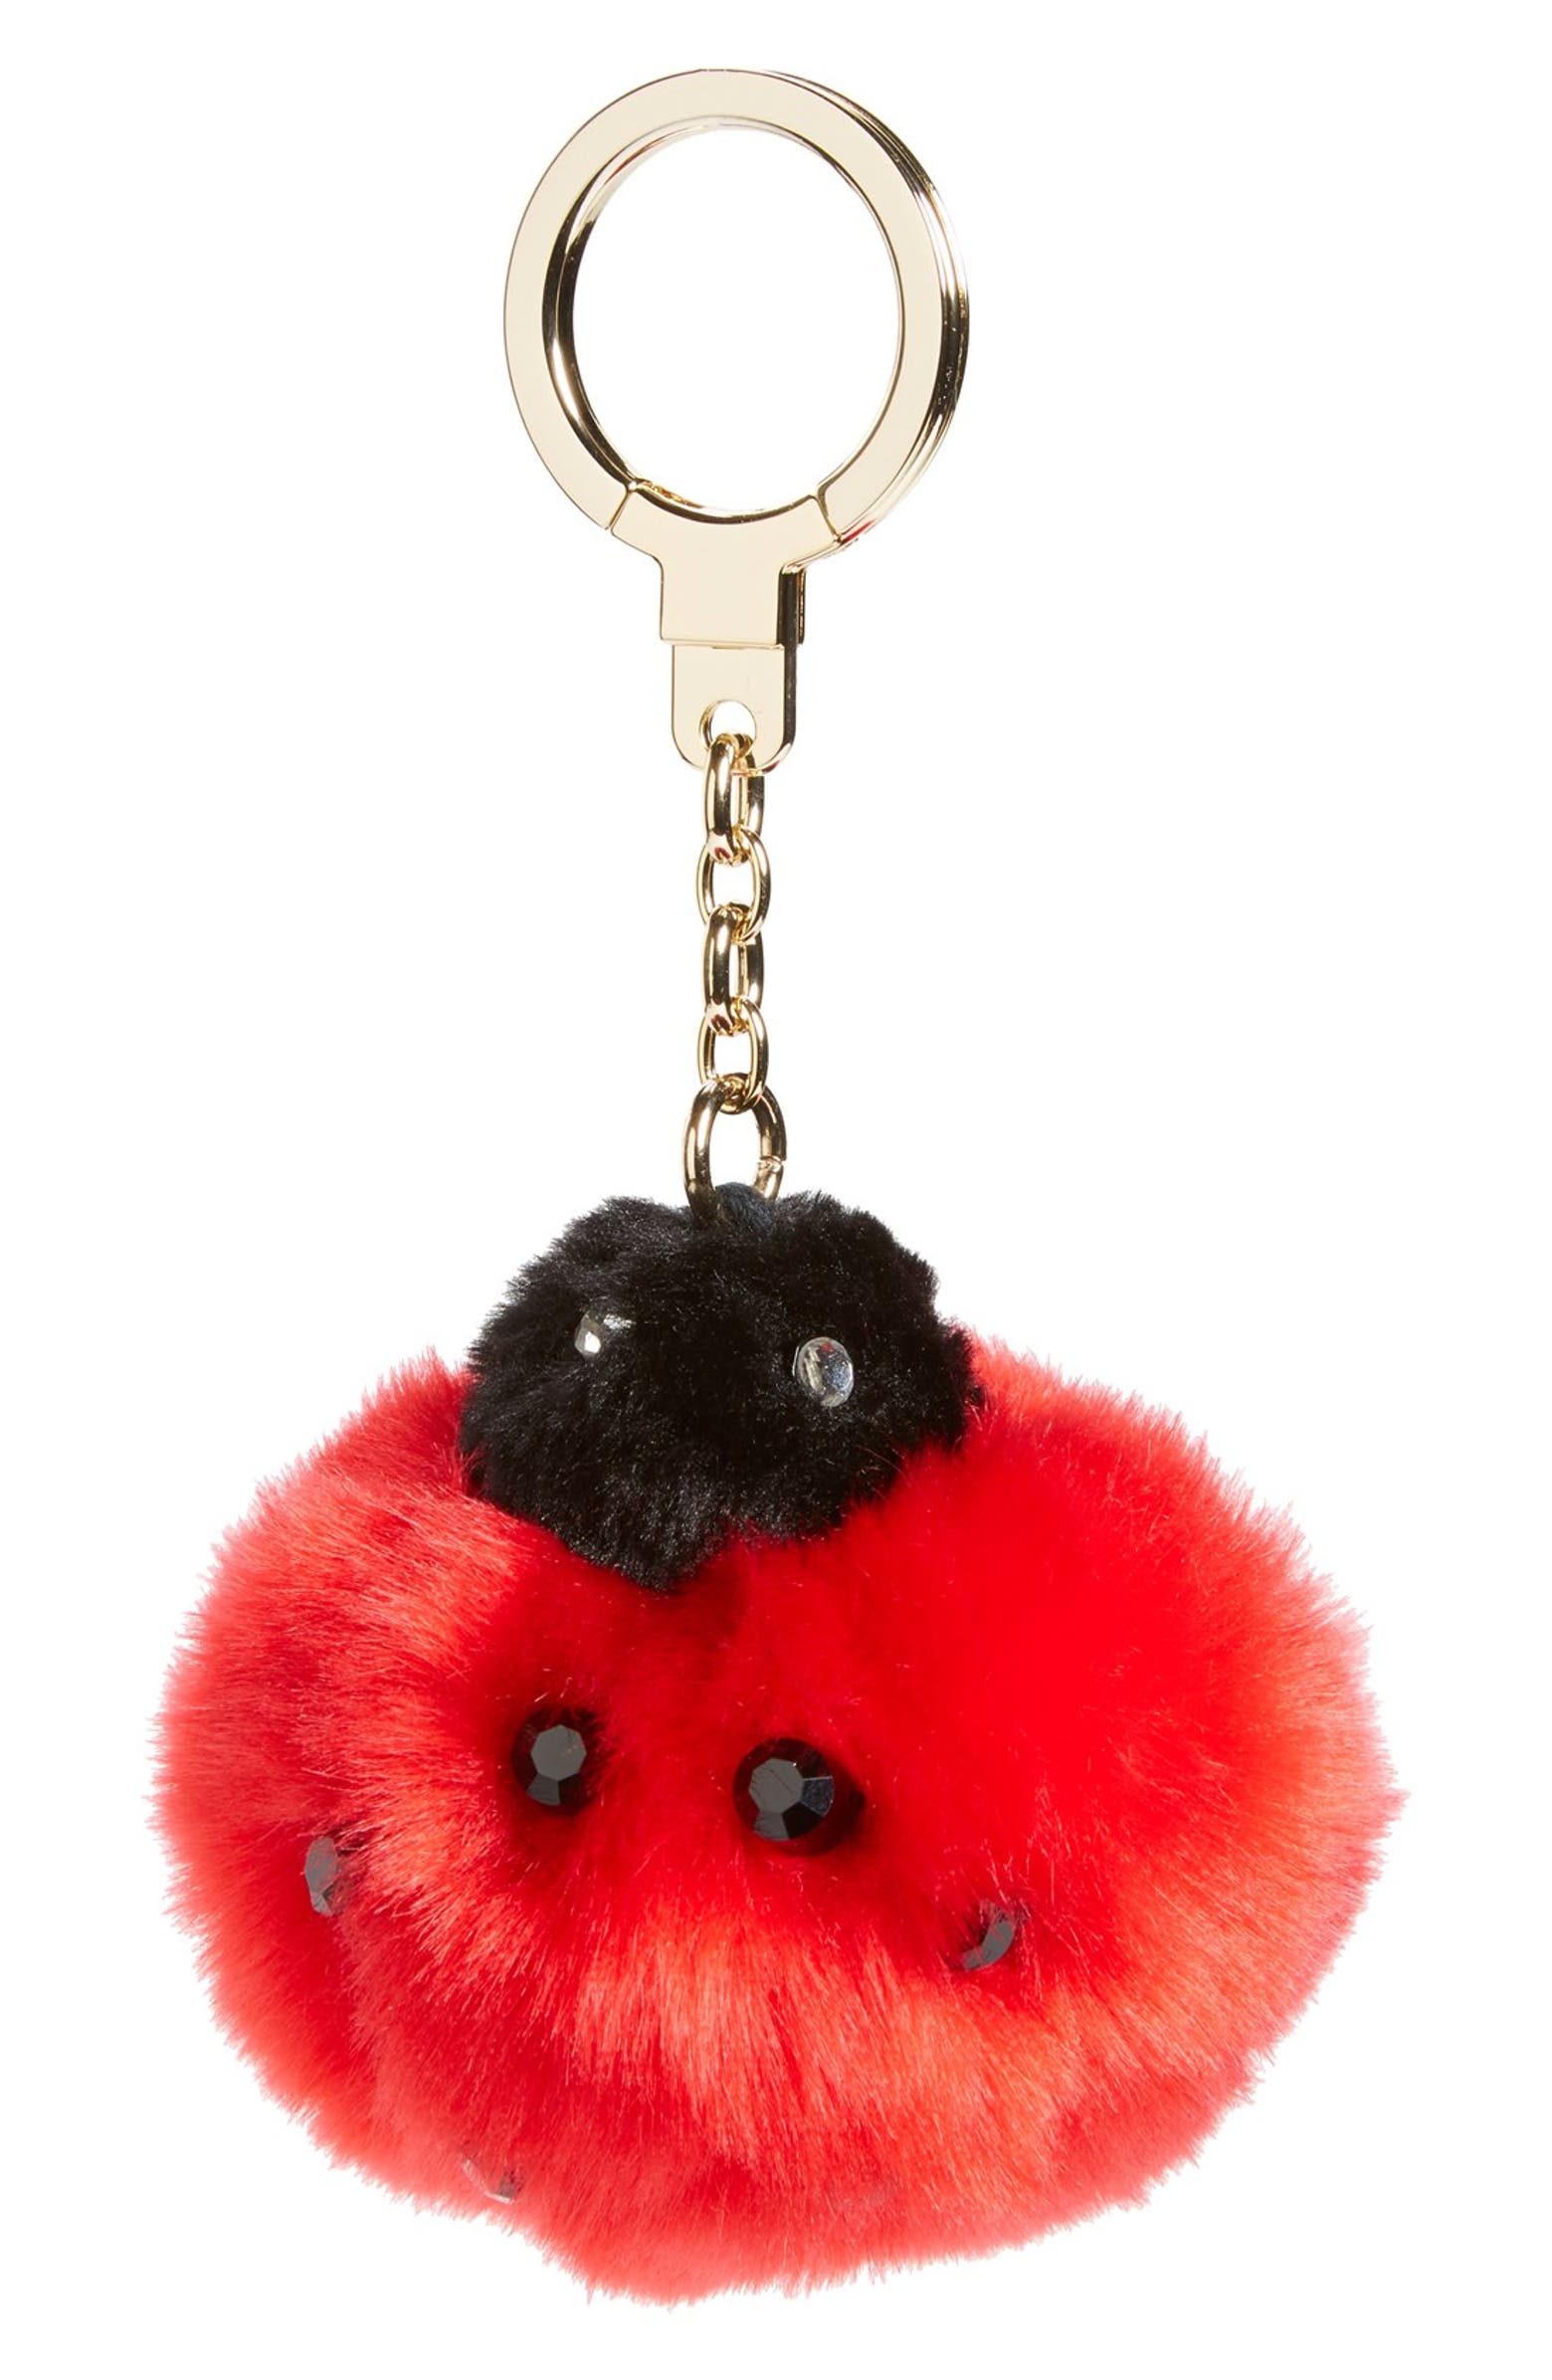 kate spade new york 'ladybug pom pom' faux fur bag charm | Nordstrom